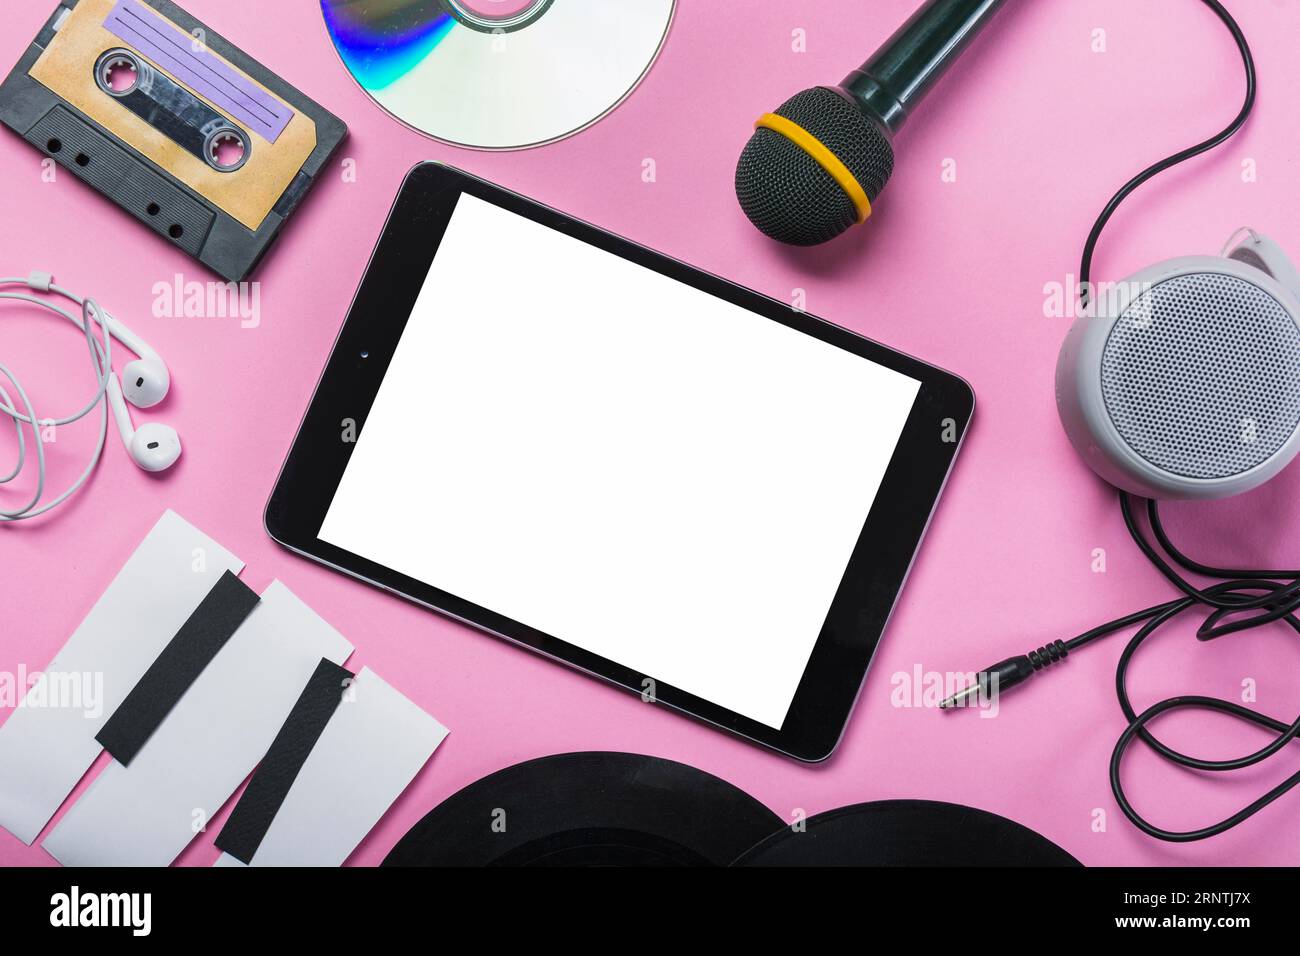 Cassette tape cd earphone vinyl record microphone speaker paper piano keys around digital tablet pink background Stock Photo